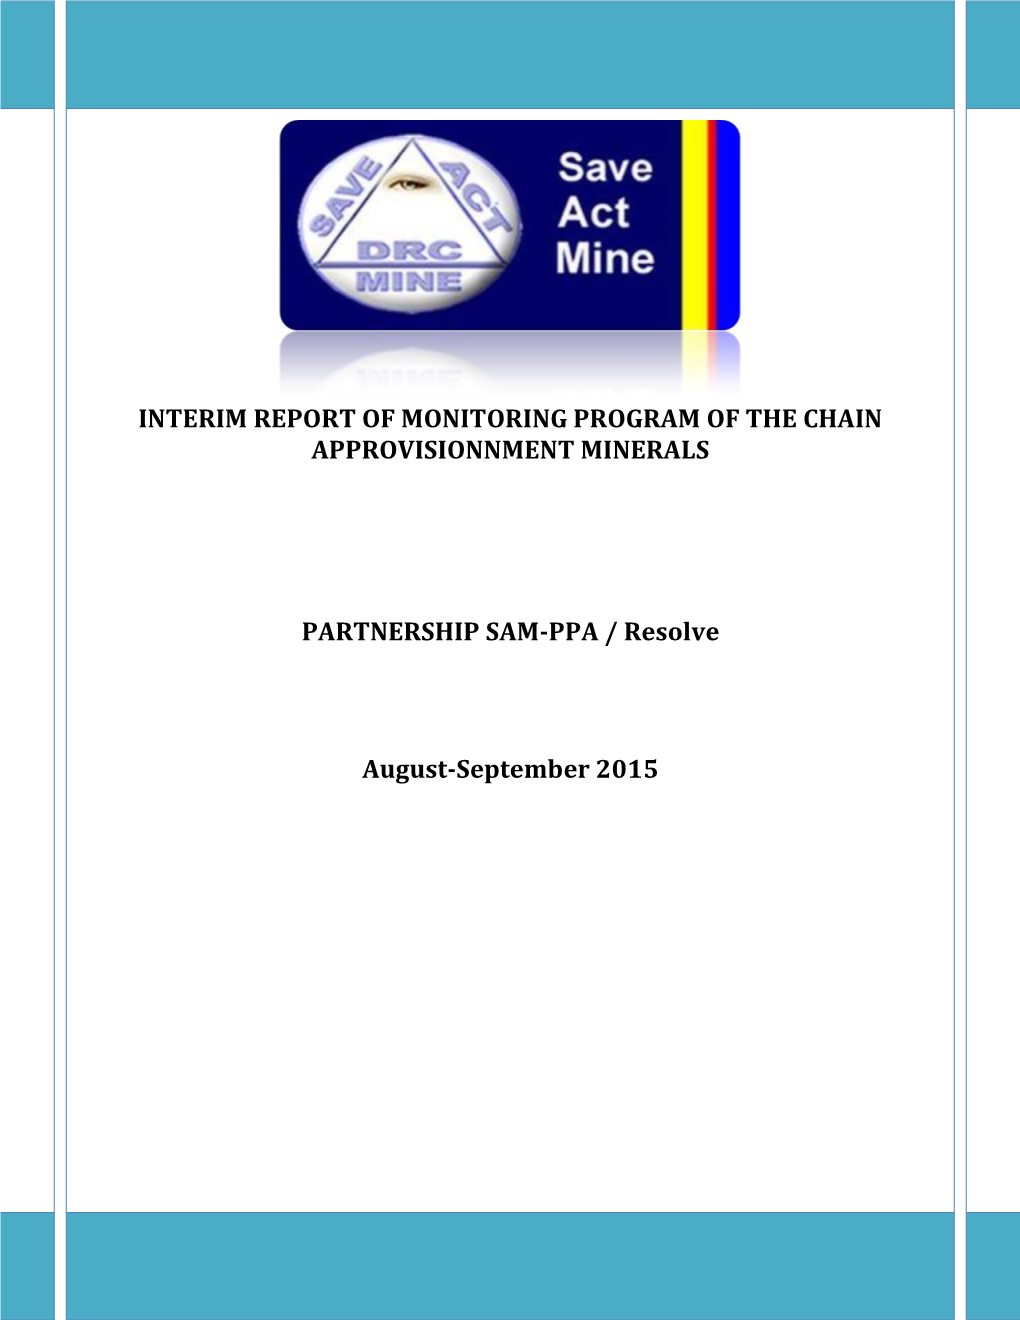 Interim Report of Monitoring Program of the Chain Approvisionnment Minerals